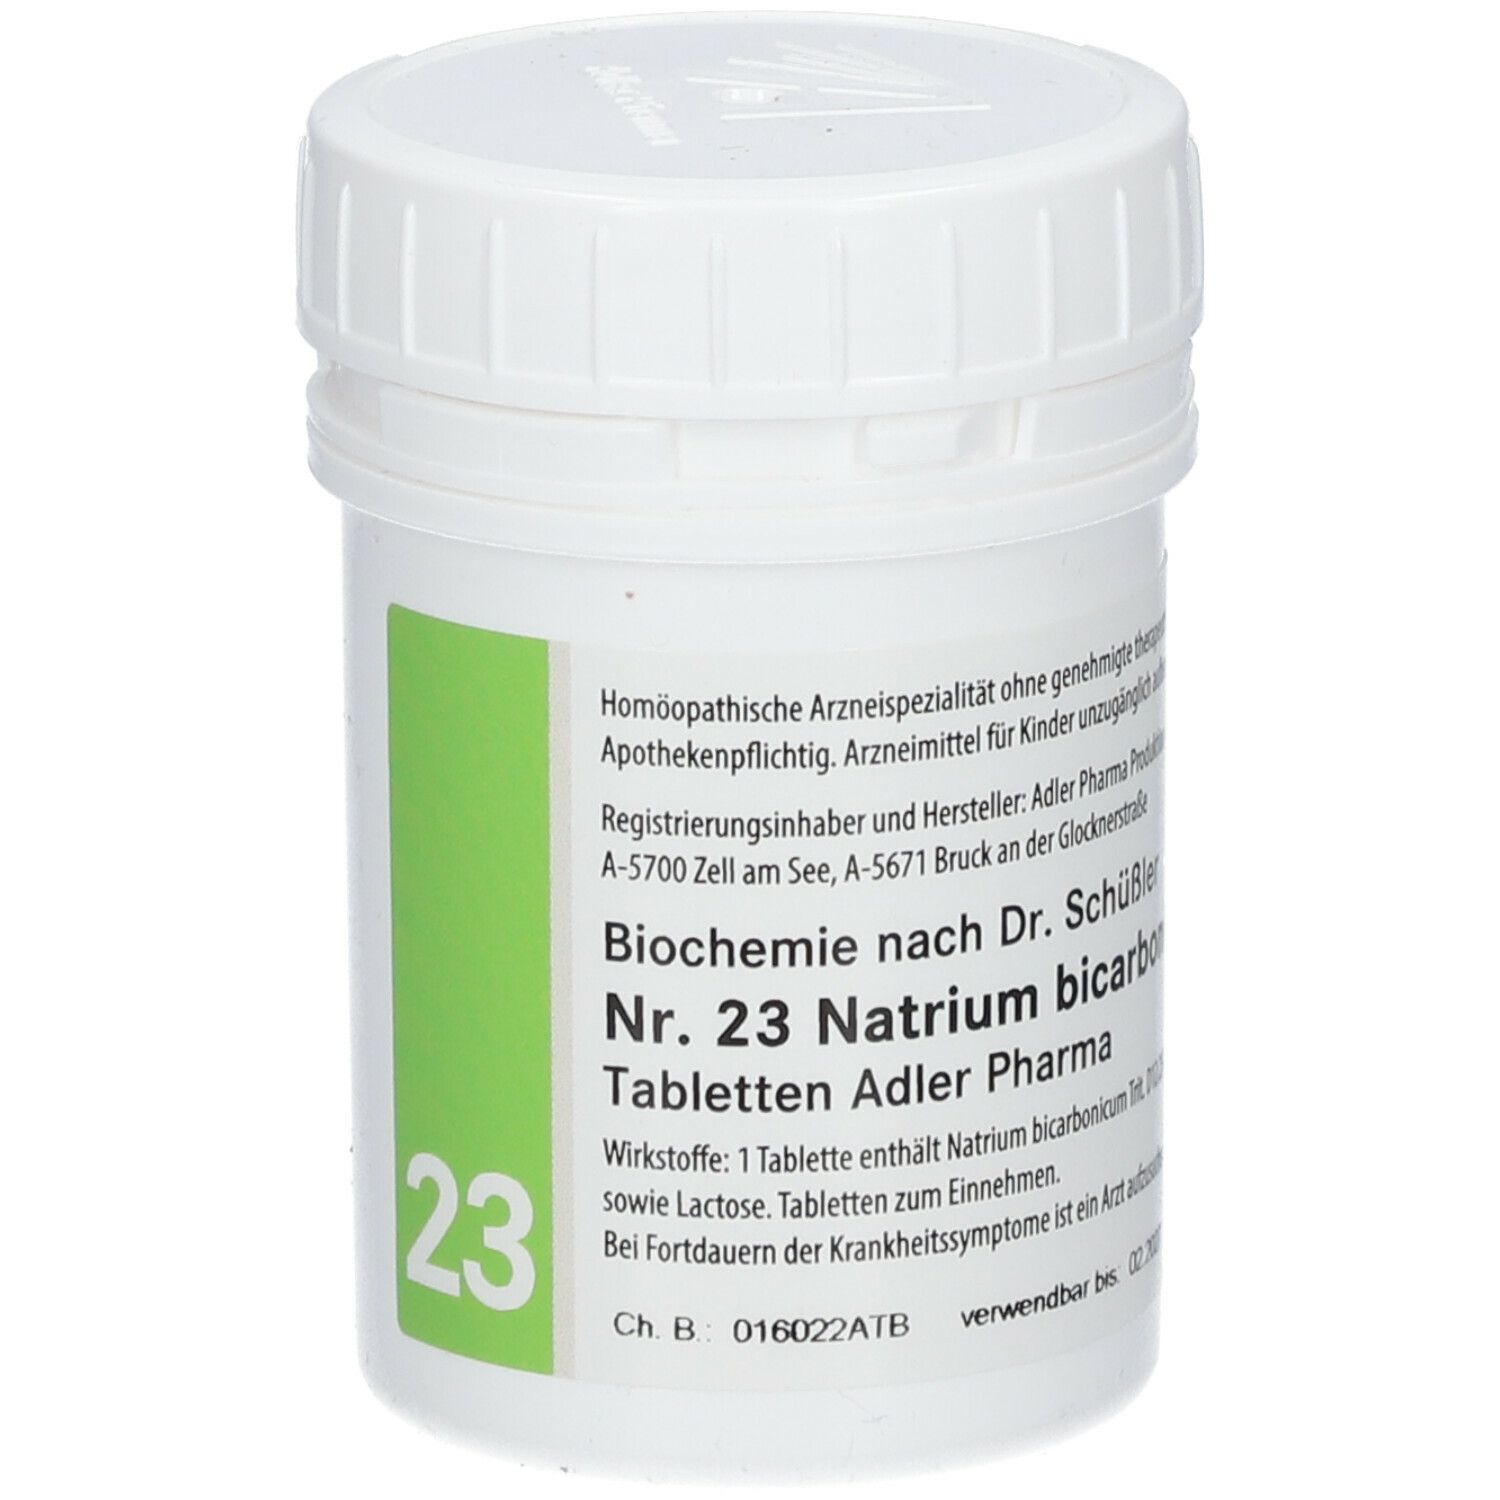 Adler Schüssler Salze Nr. 23 Natrium bicarbonicum D12